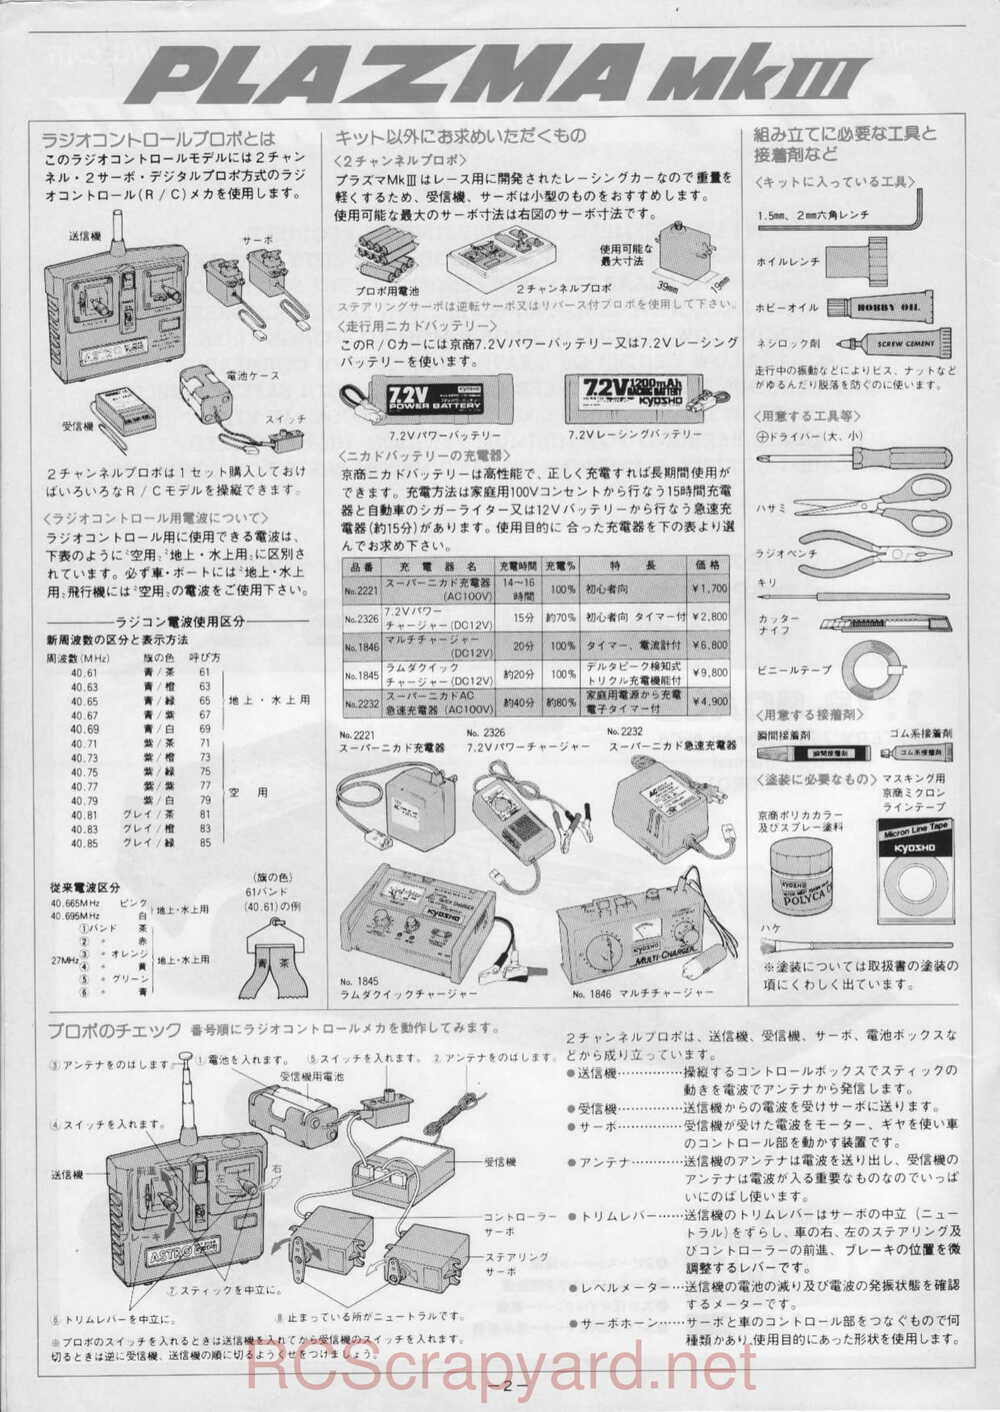 Kyosho - 3151 - Plazma-MkIII - Manual - Page 02